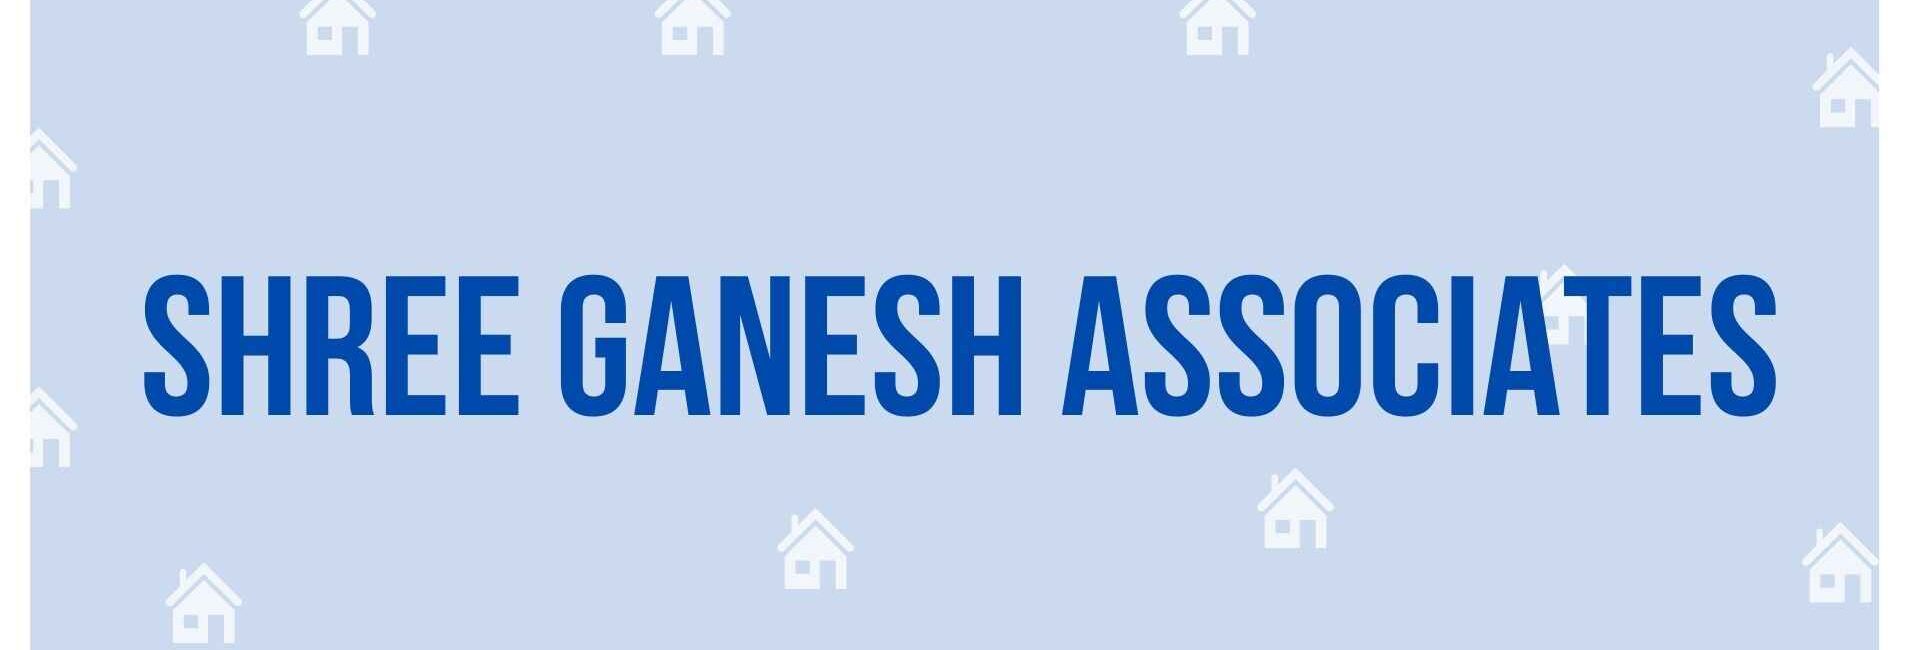 Shree Ganesh Associates - Property Dealer in Noida